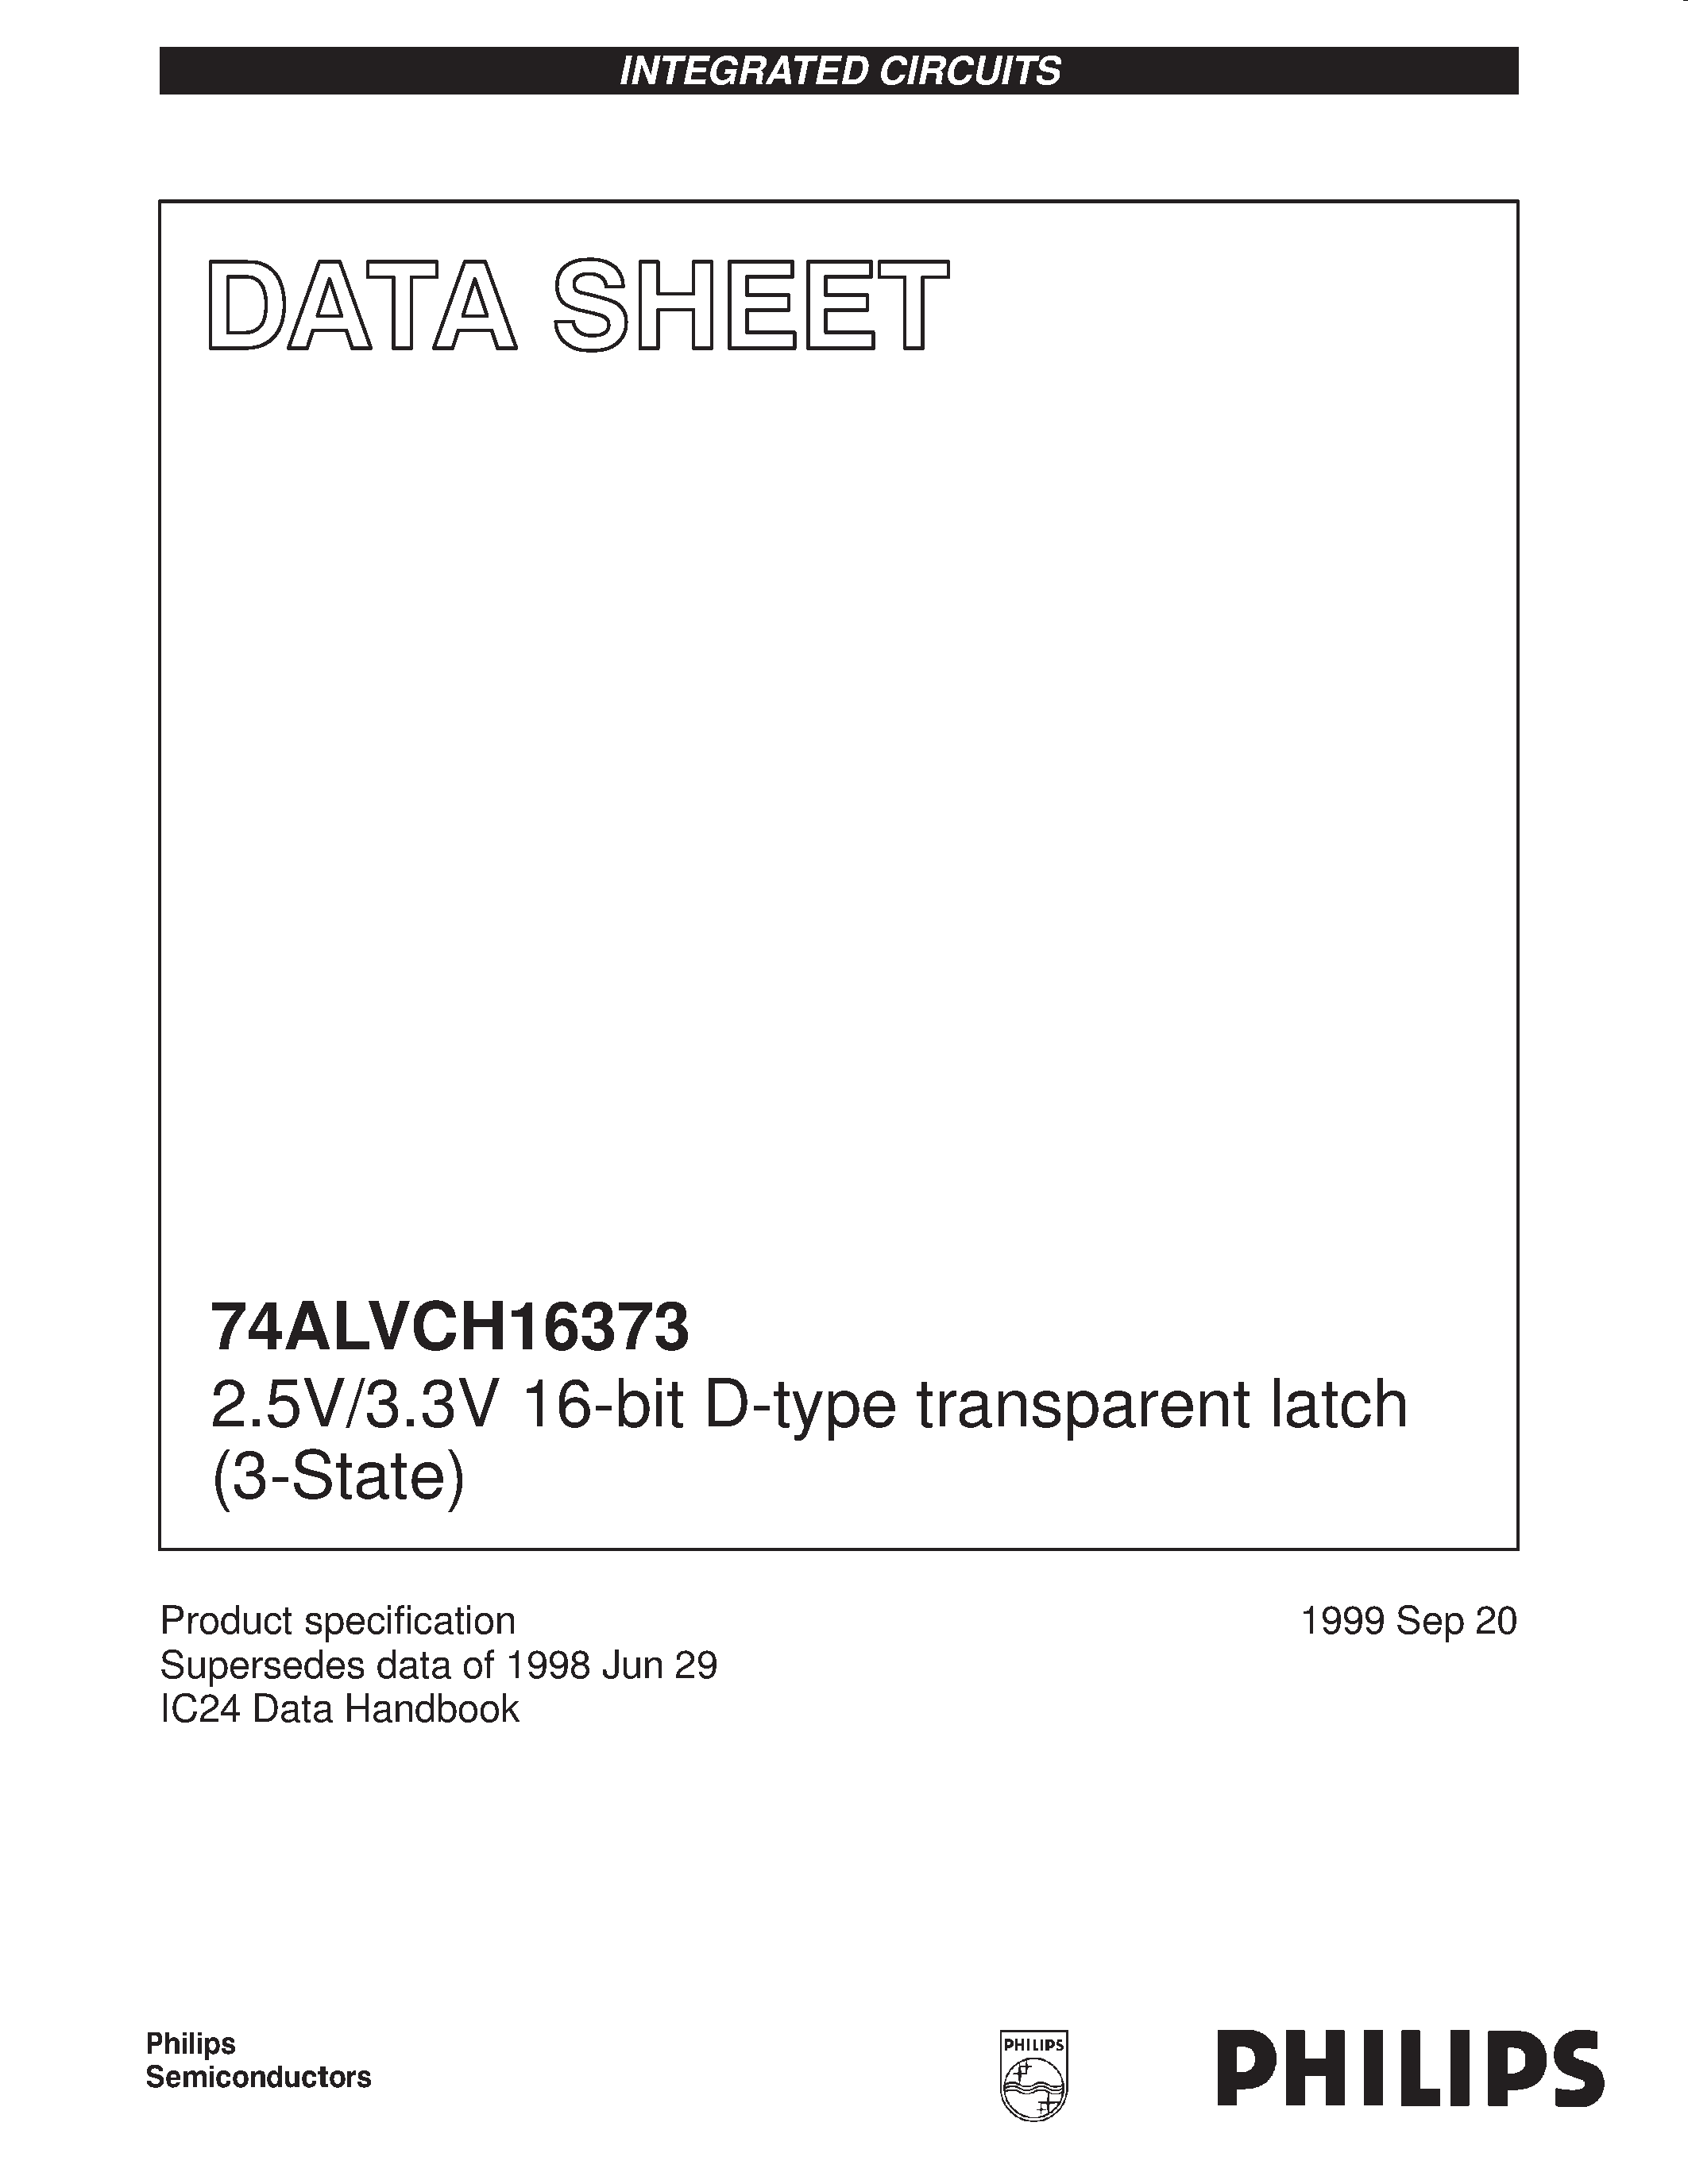 Datasheet 74ALVCH16373 - 2.5V/3.3V 16-bit D-type transparent latch 3-State page 1